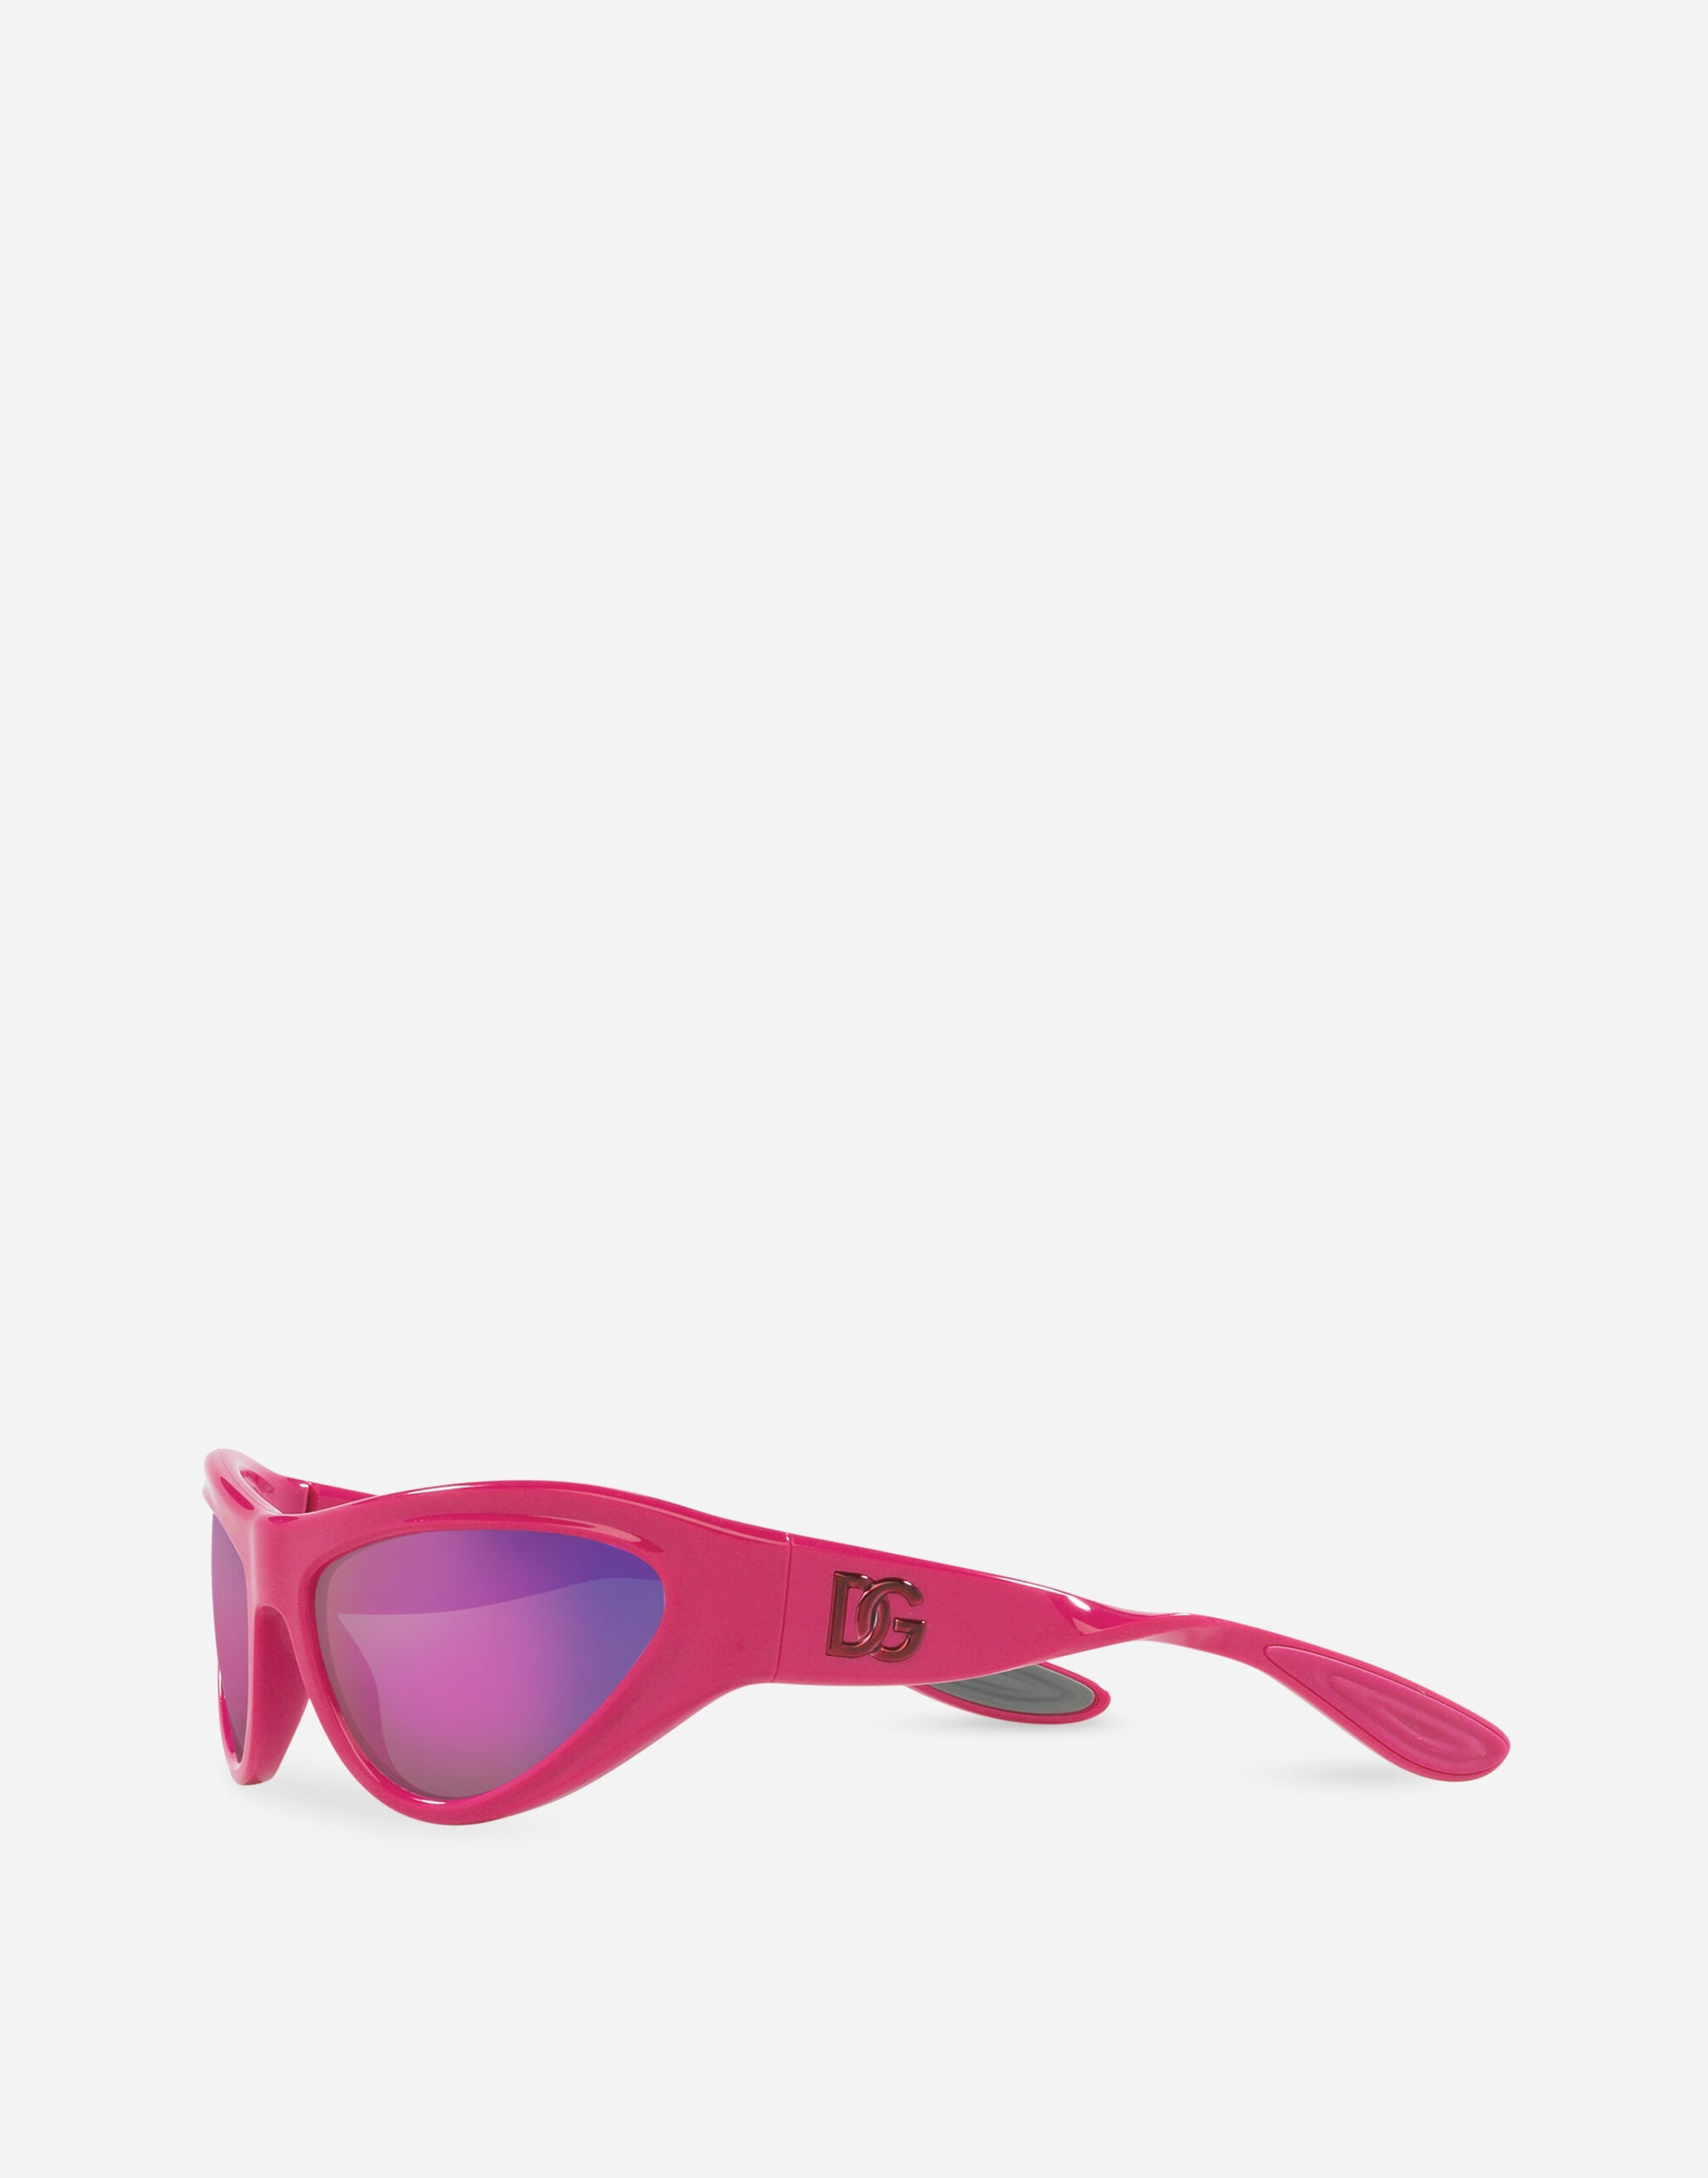 DG Toy sunglasses - 2